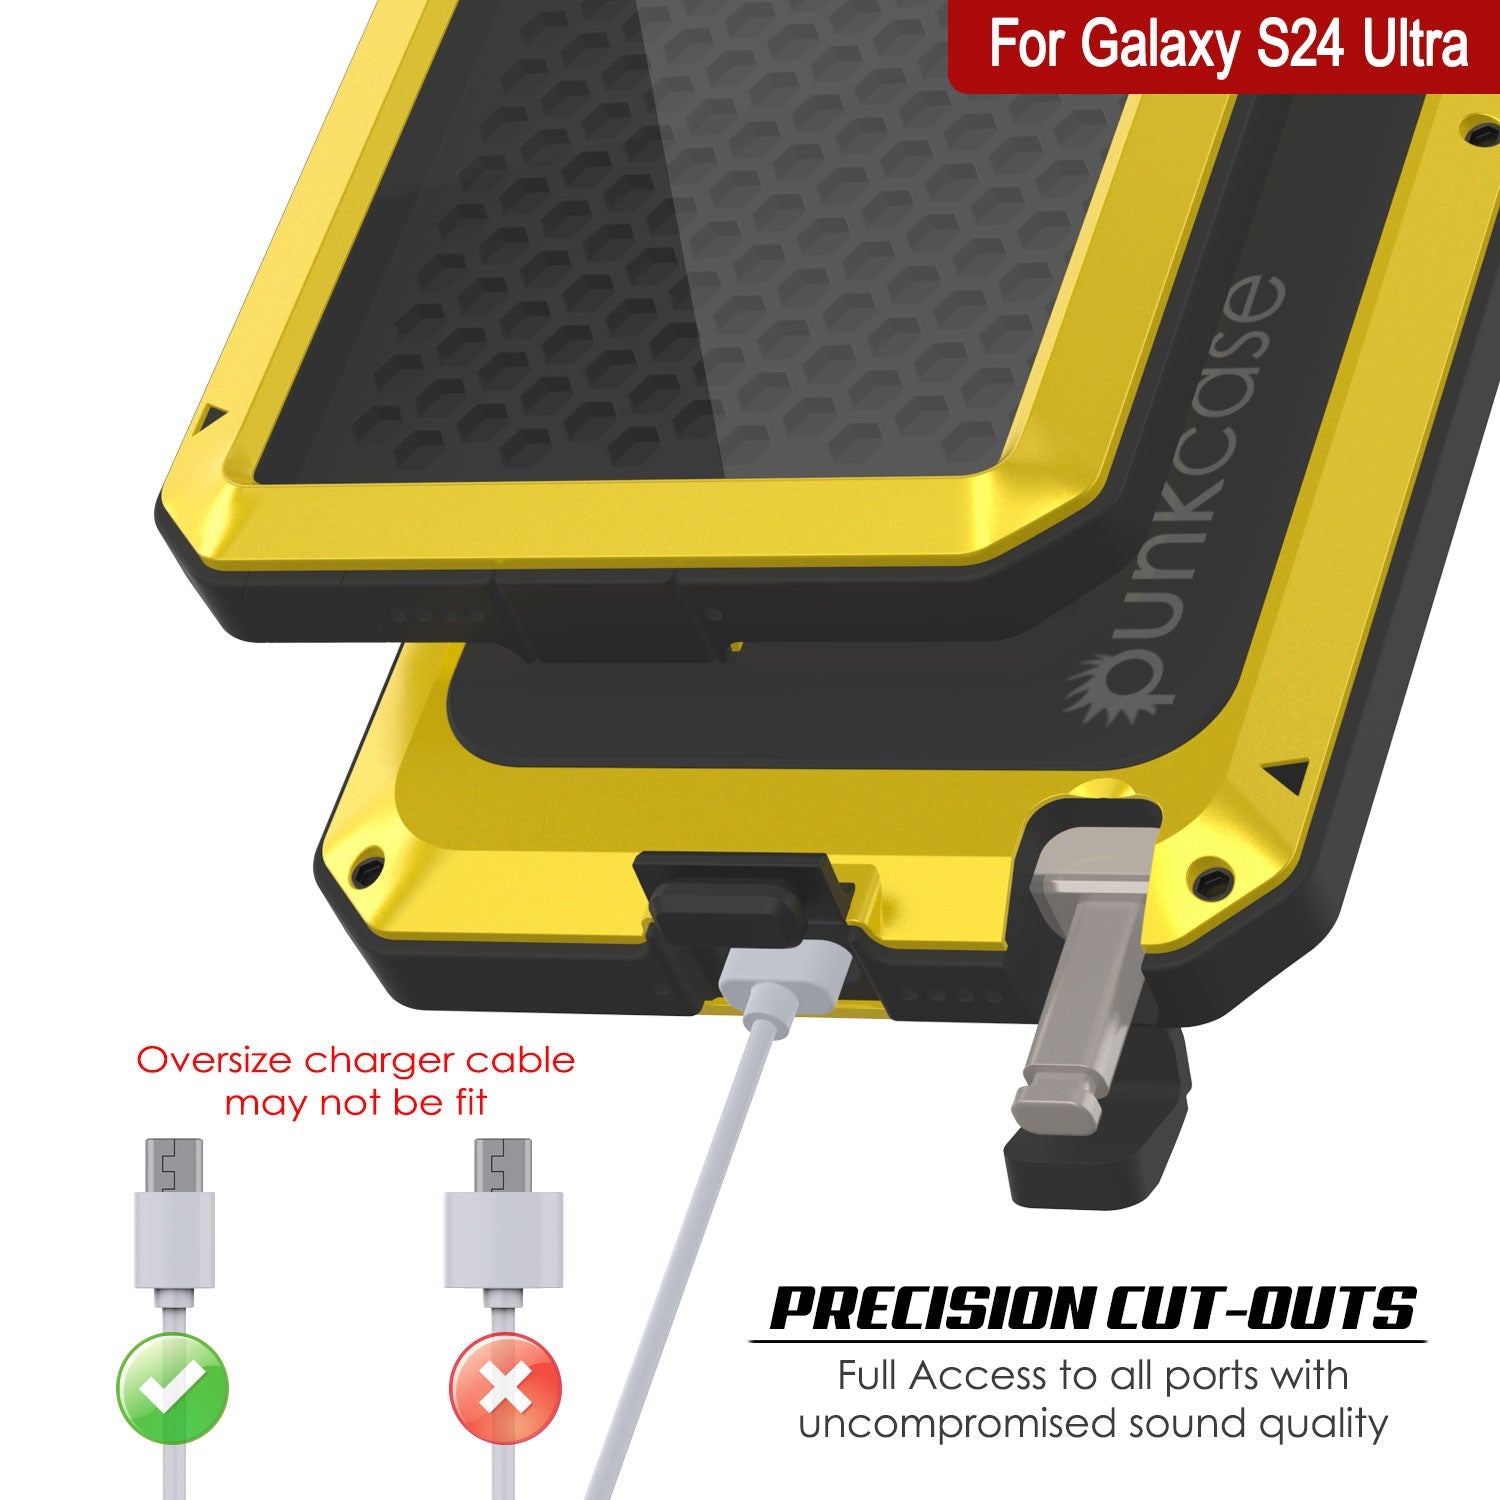 Galaxy S24 Ultra Metal Case, Heavy Duty Military Grade Armor Cover [shock proof] Full Body Hard [Yellow]